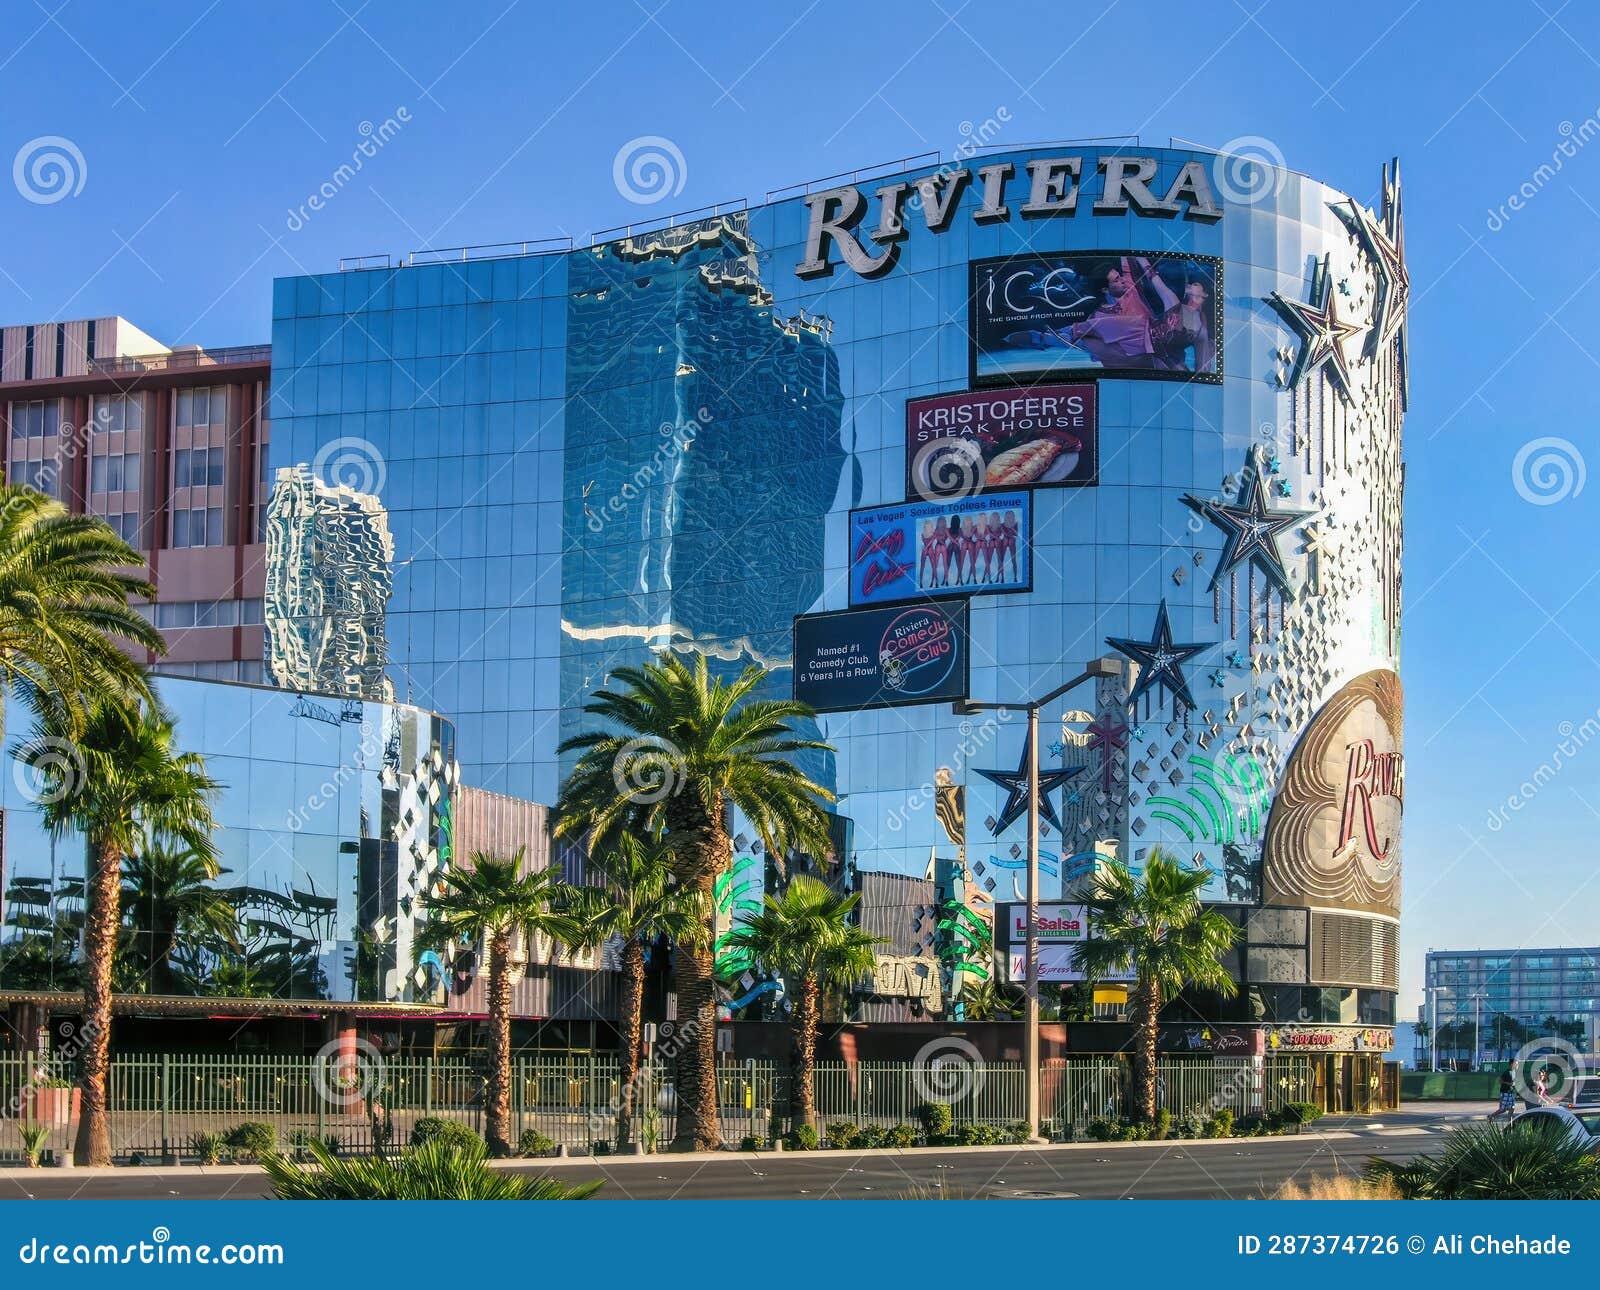 Riviera Hotel and Casino on The Strip, Las Vegas, Nevada, USA